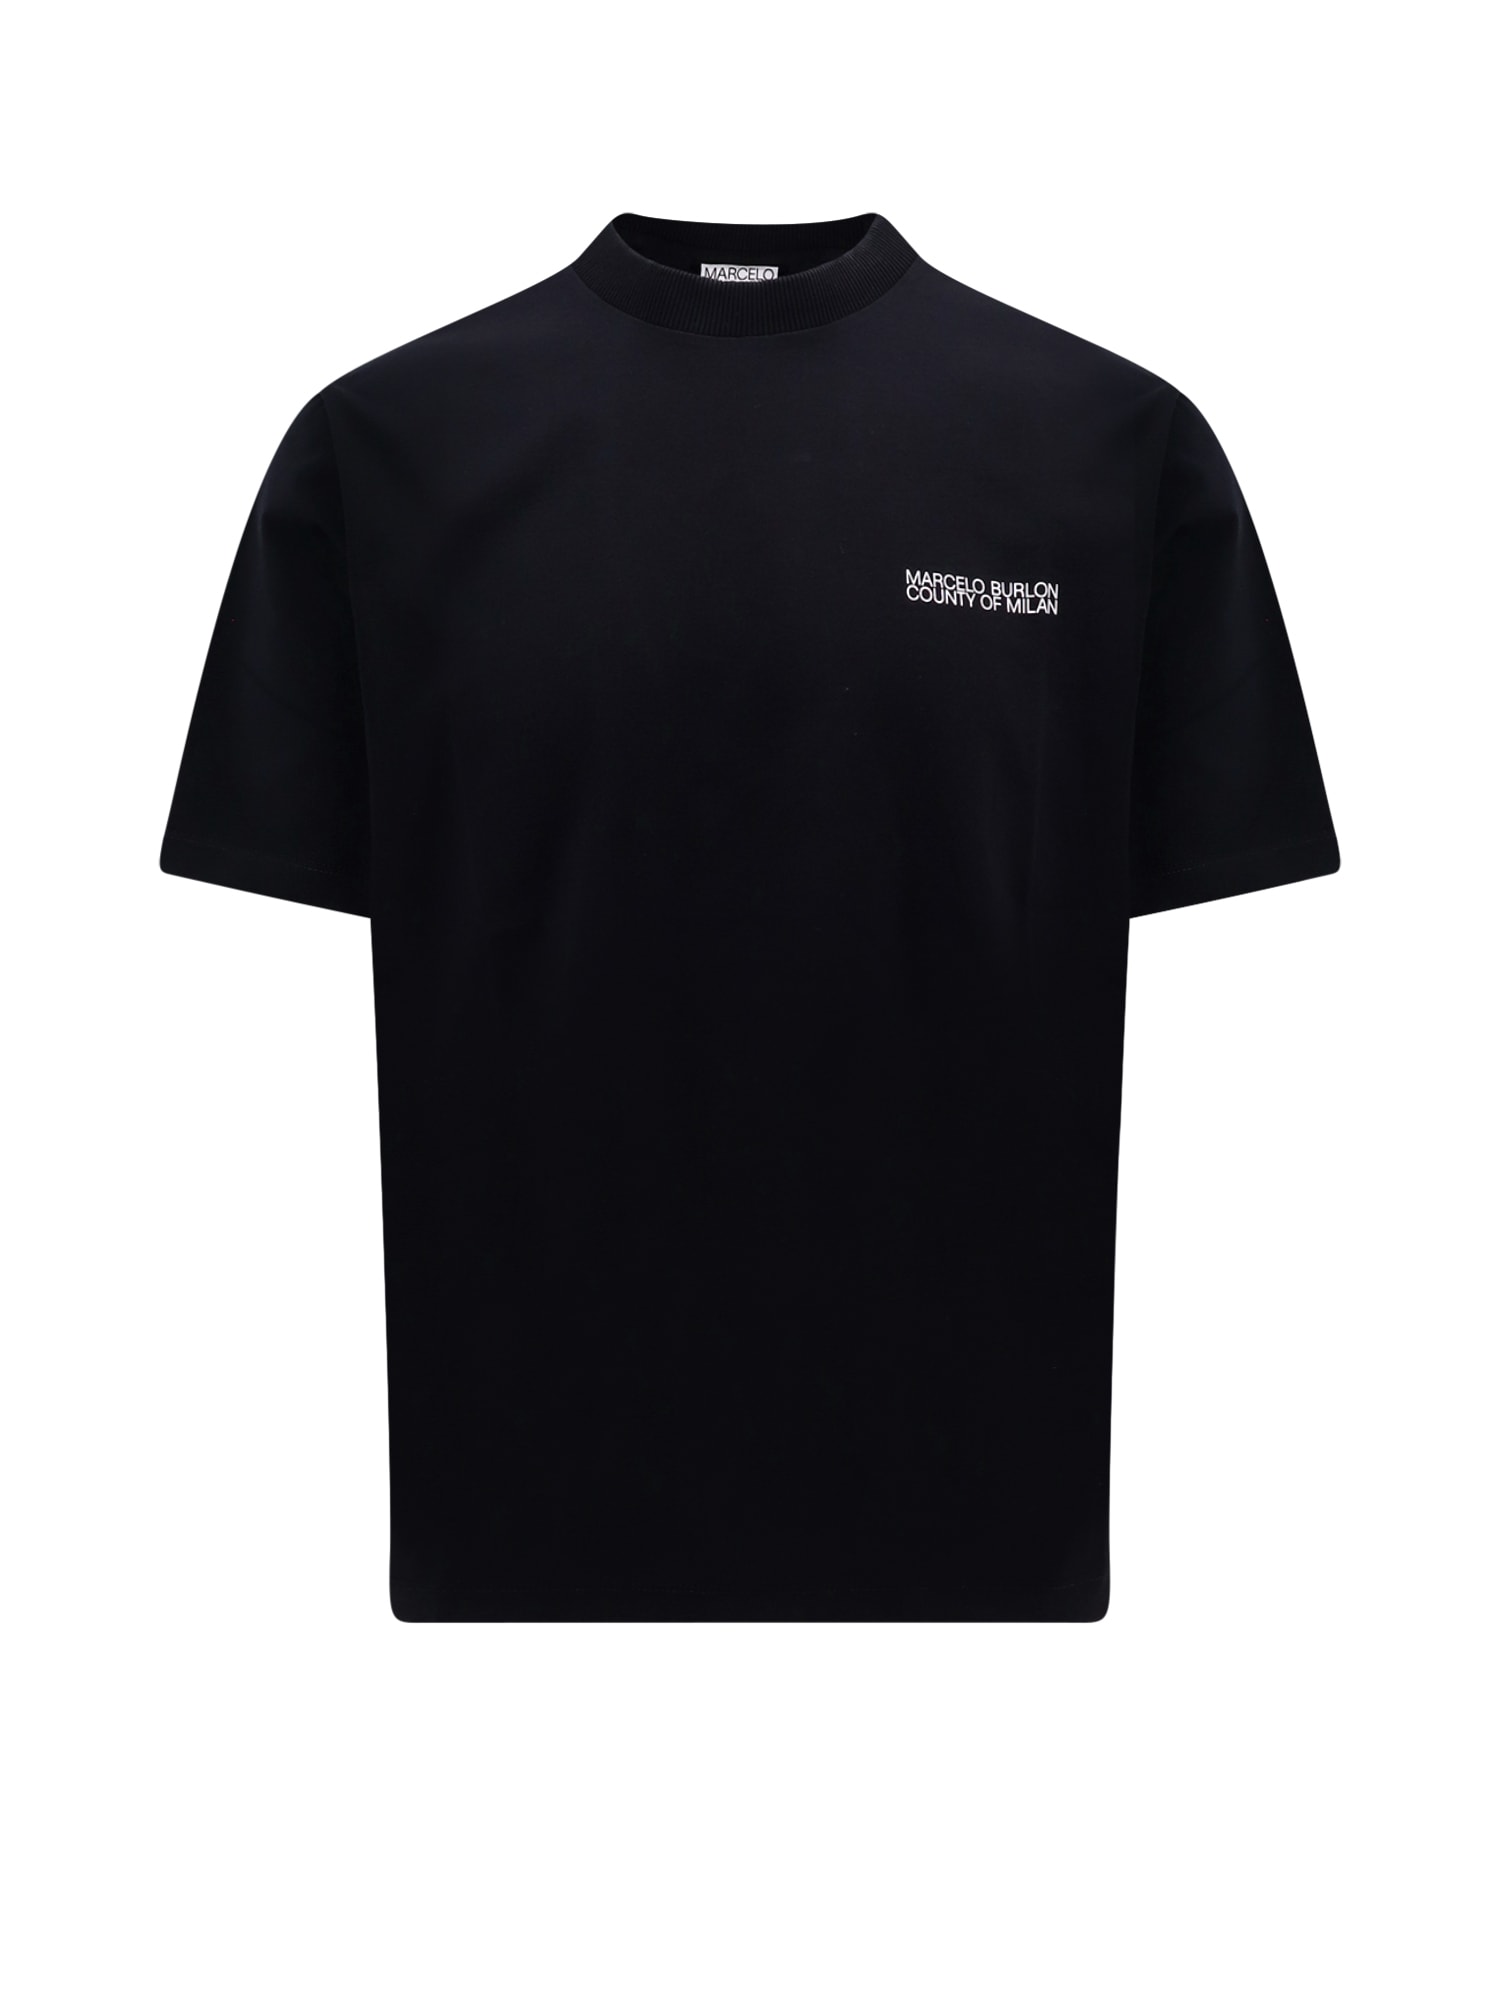 Shop Marcelo Burlon County Of Milan T-shirt In Black White